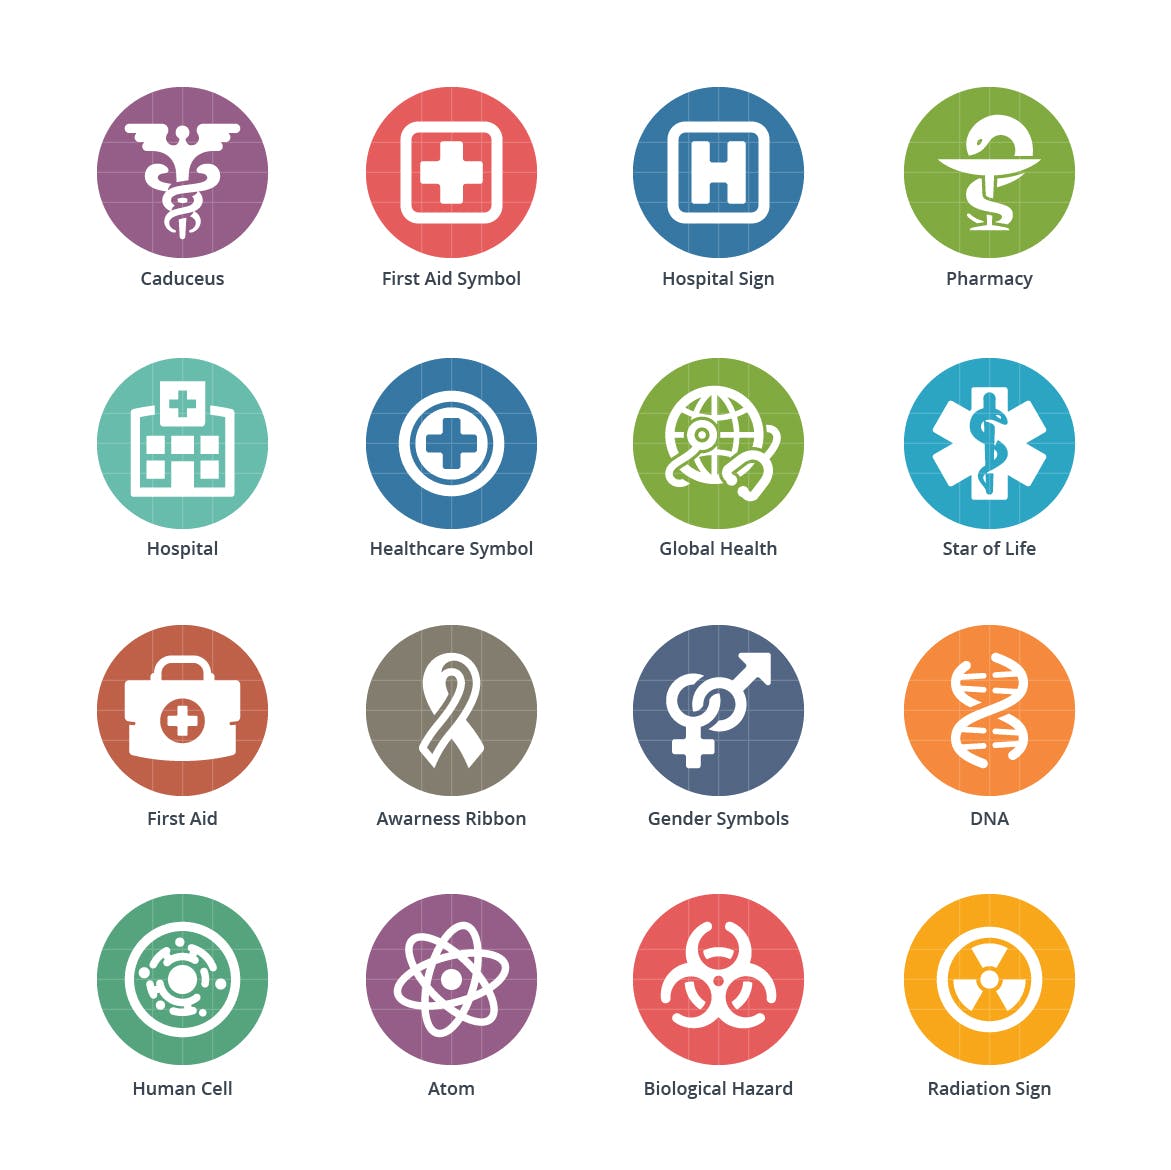 Colored系列-医疗保健主题矢量亿图网易图库精选图标集v1 Medical & Health Care Icons Set 1 – Colored Series插图(2)